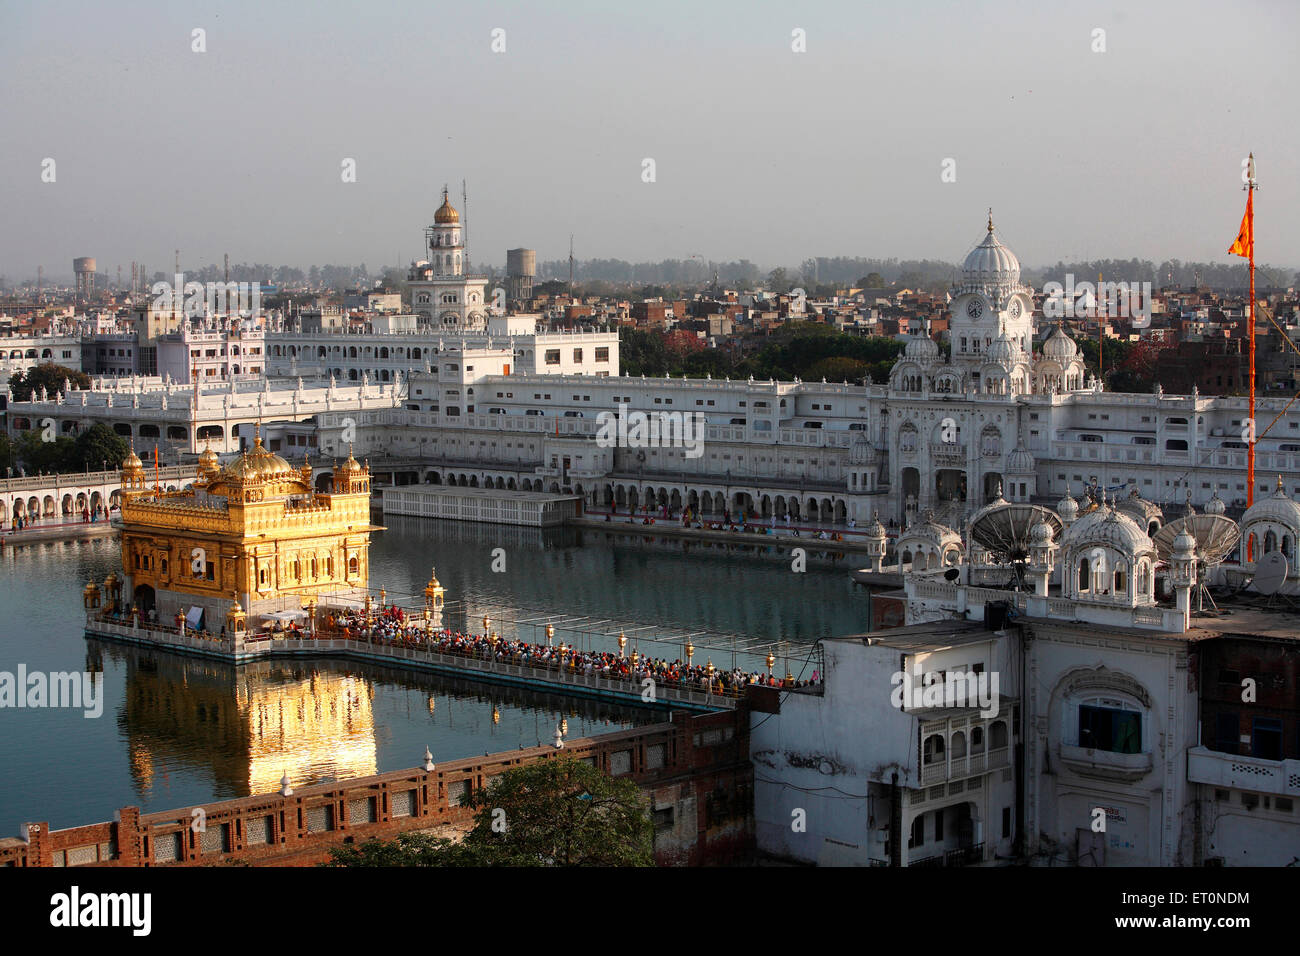 Aerial view of Harmandir Sahib or Darbar Sahib or Golden Temple complex and Amritsar city Punjab India Stock Photo